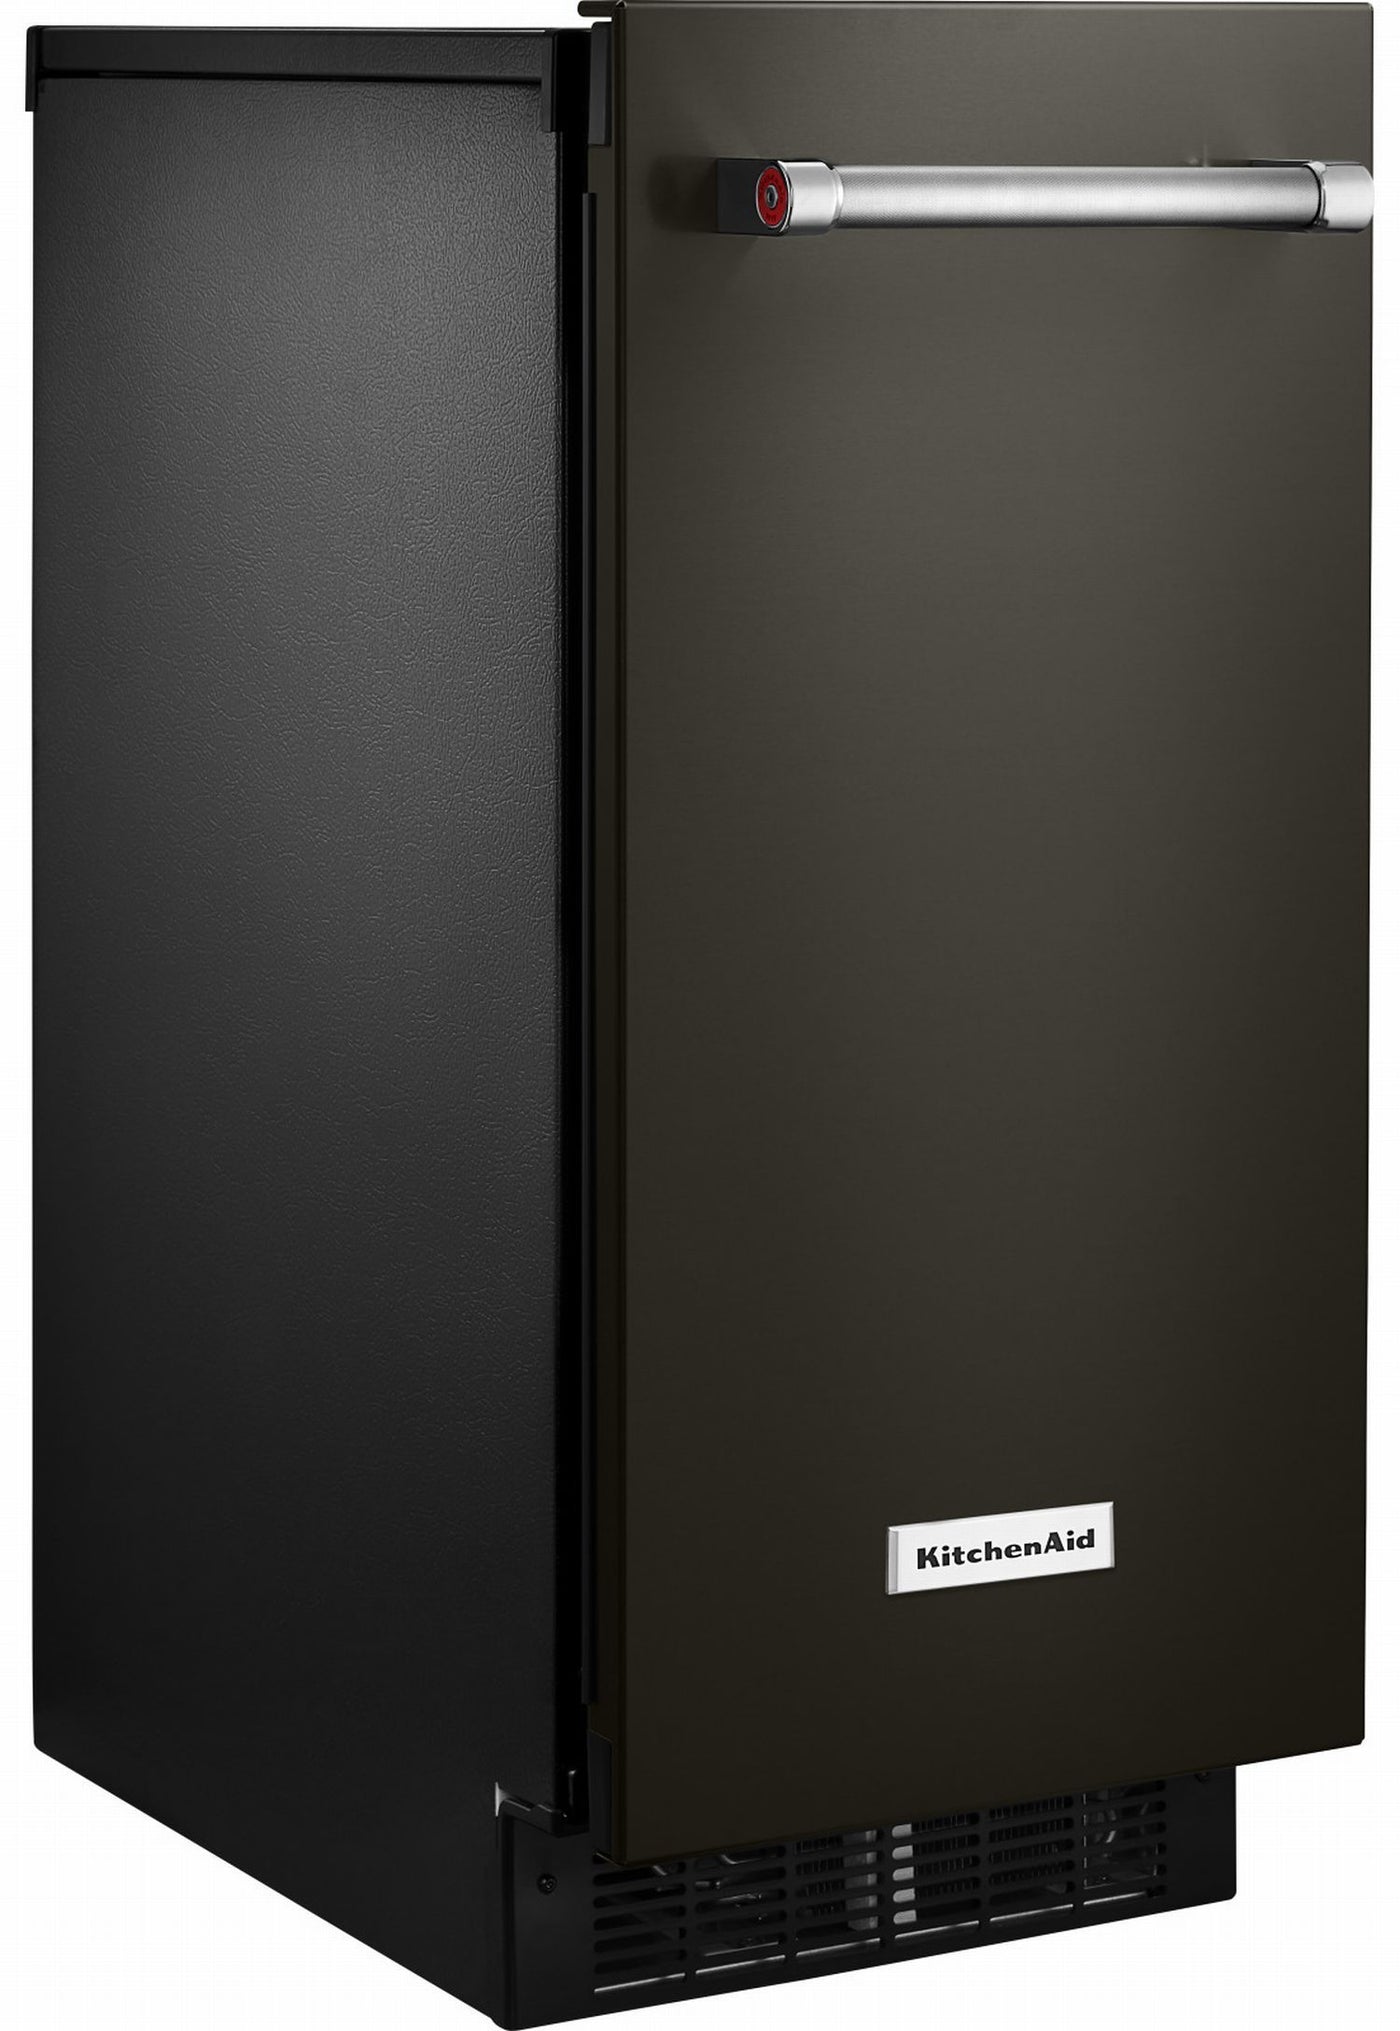 KitchenAid Black Stainless Steel with PrintShield 15" Automatic Ice Maker - KUIX535HBS